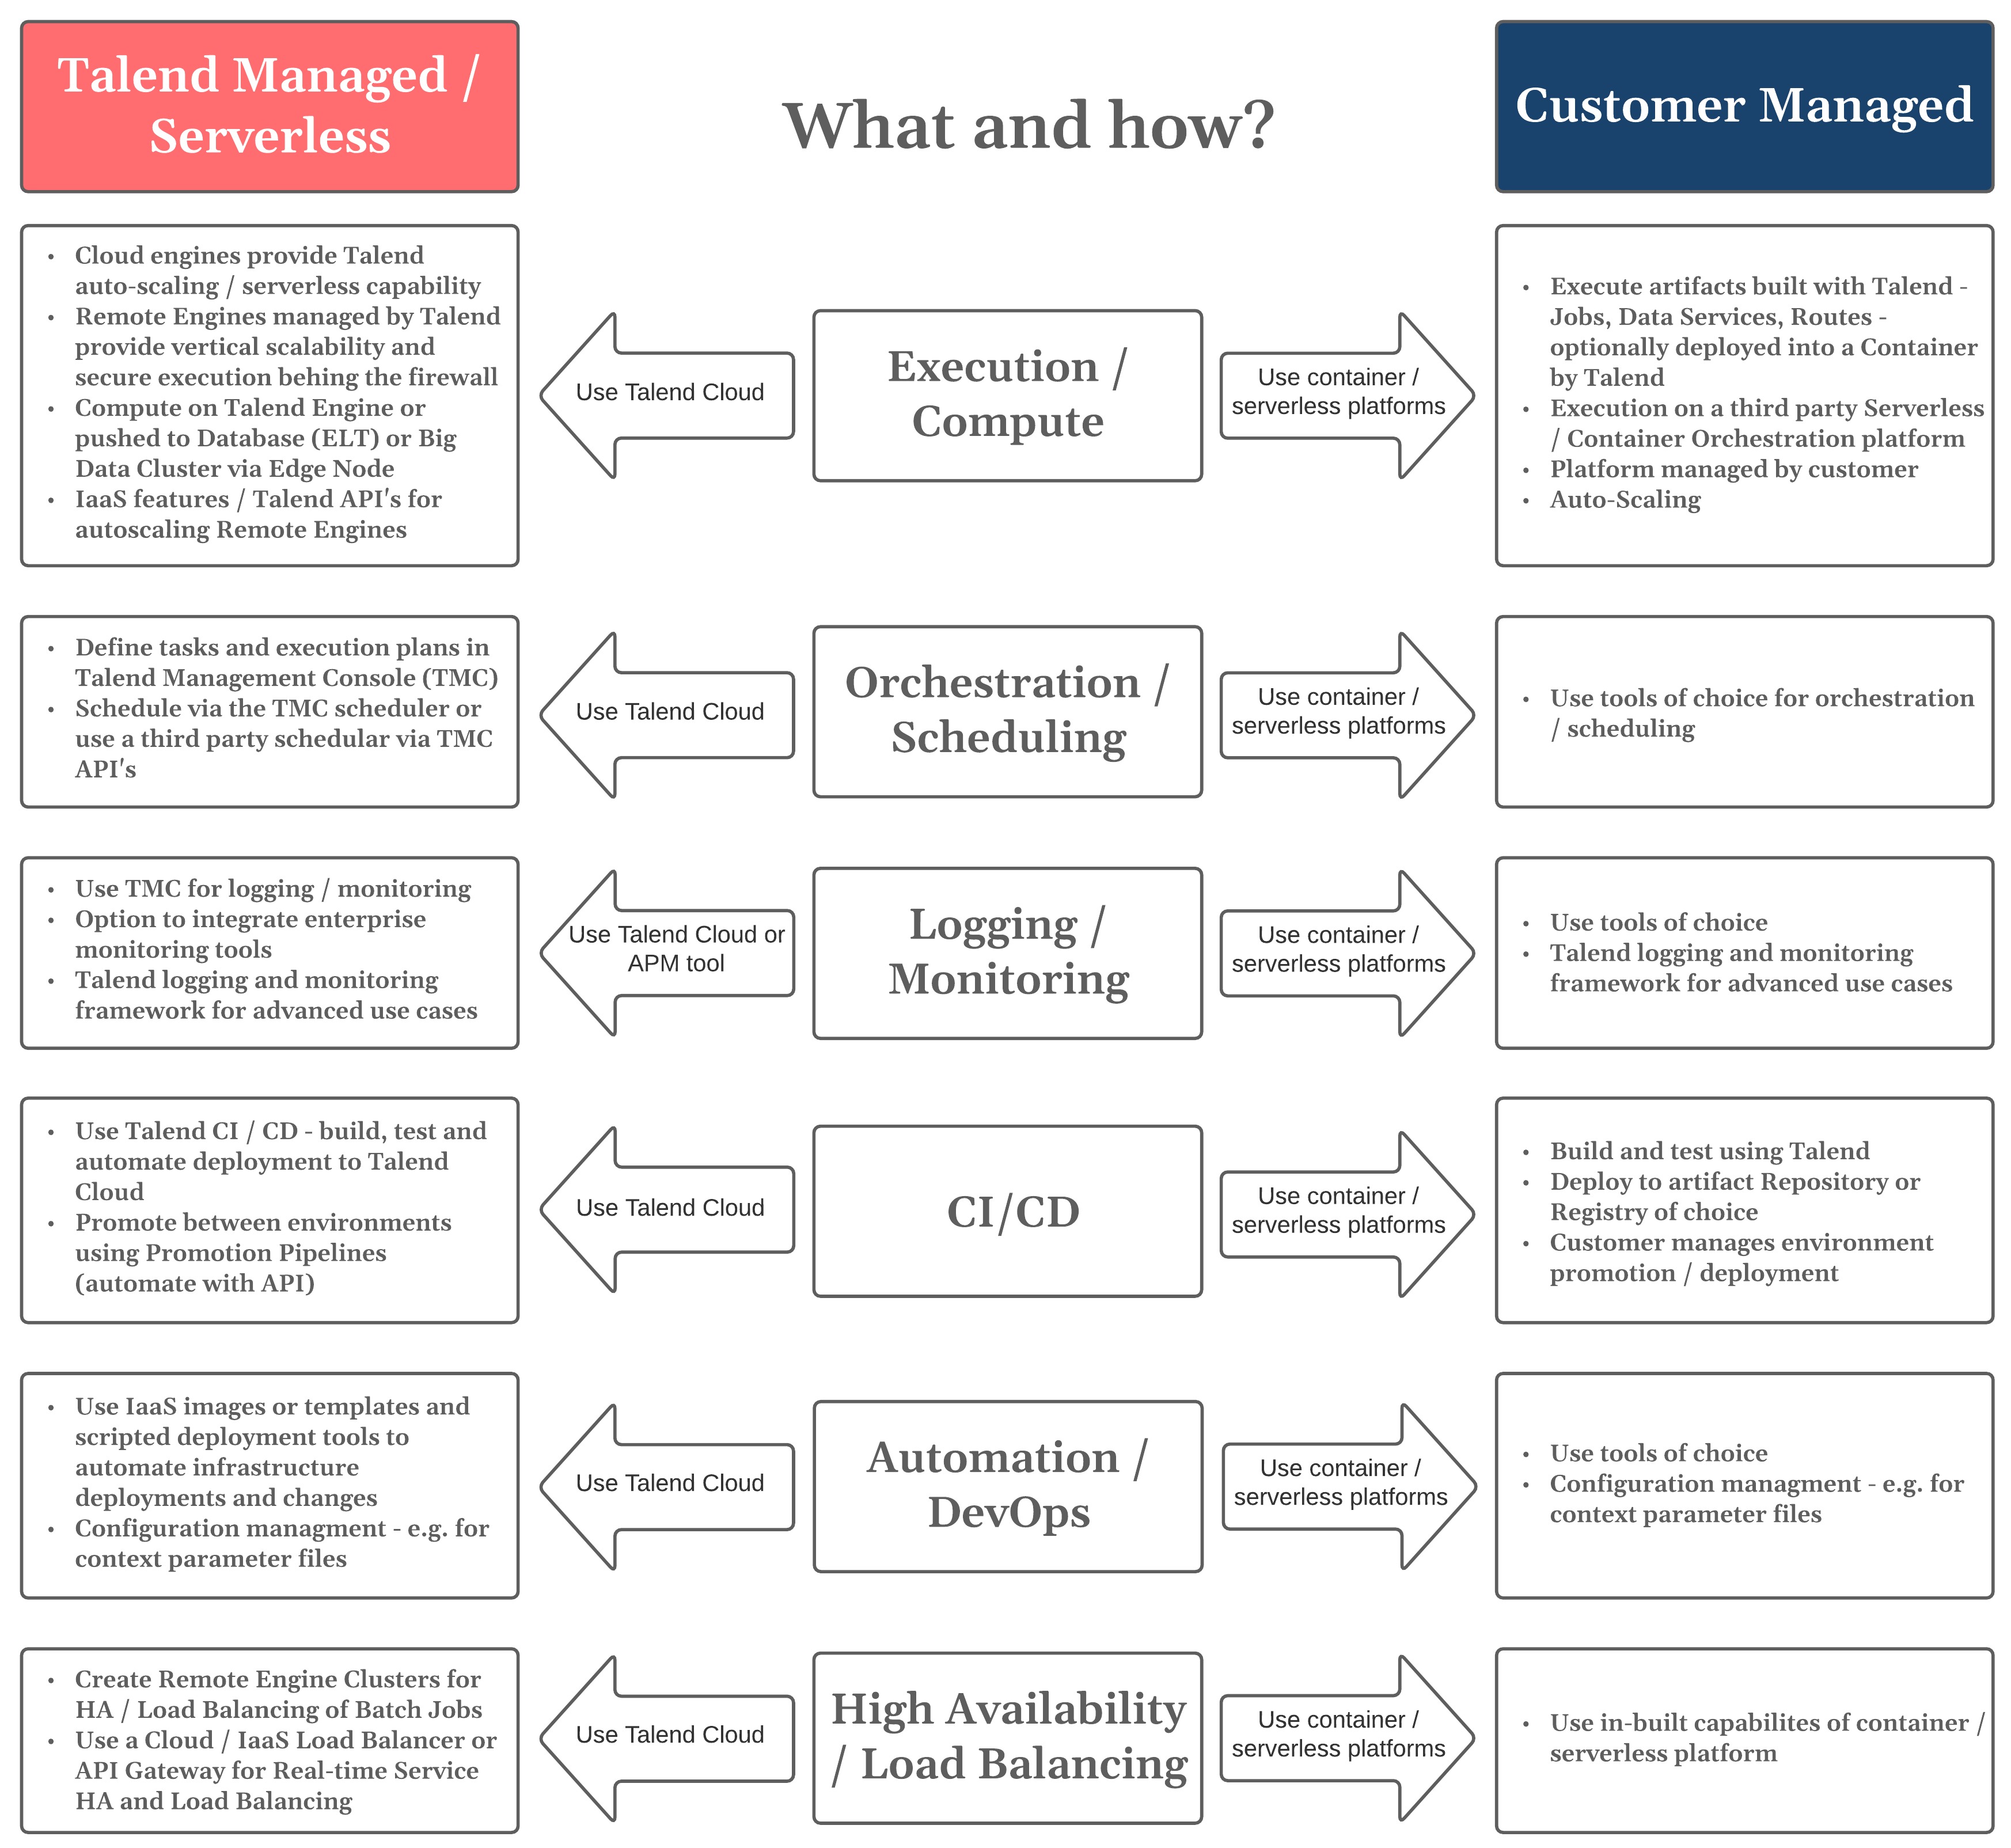 Talend Managed/Serverless vs Customer Managed diagram.